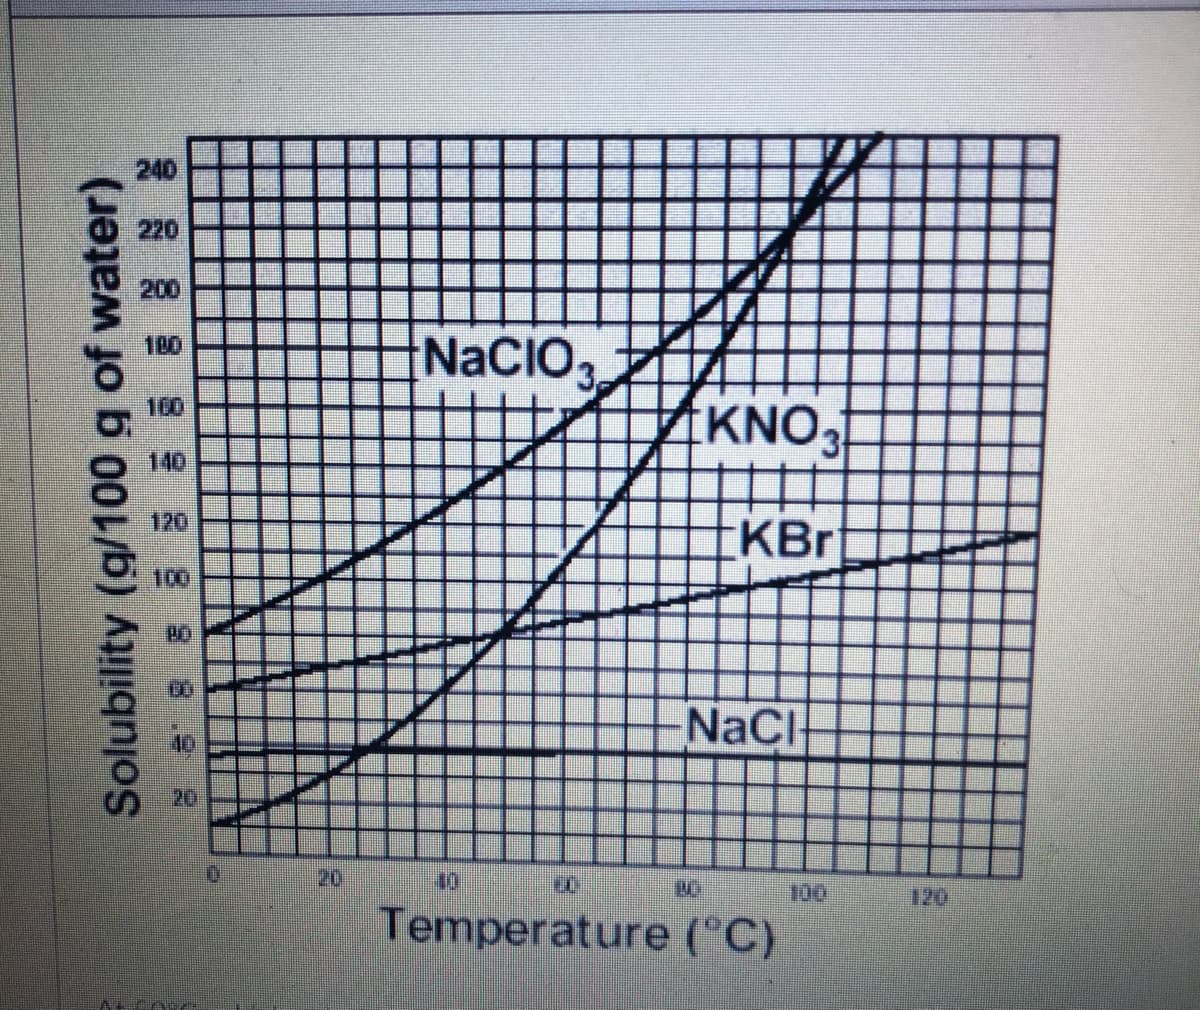 240
220
200
NACIO3
180
100
KNO
140
120
KBr
100
NaCl
20
20
10
100
120
Temperature (°C)
Solubility (g/100 g of water)
